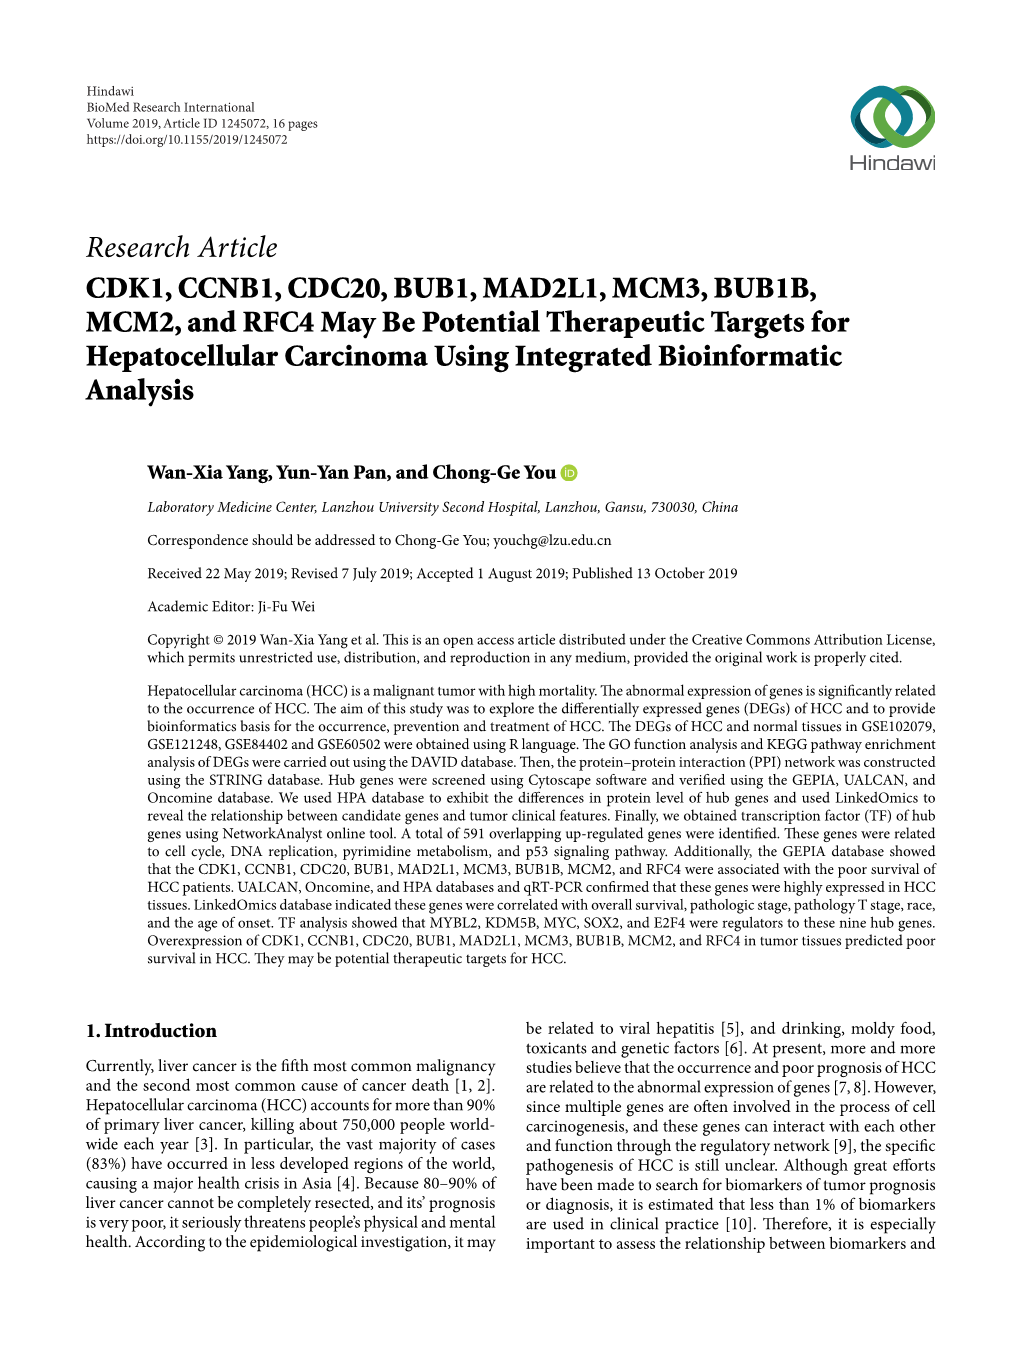 Research Article CDK1, CCNB1, CDC20, BUB1, MAD2L1, MCM3